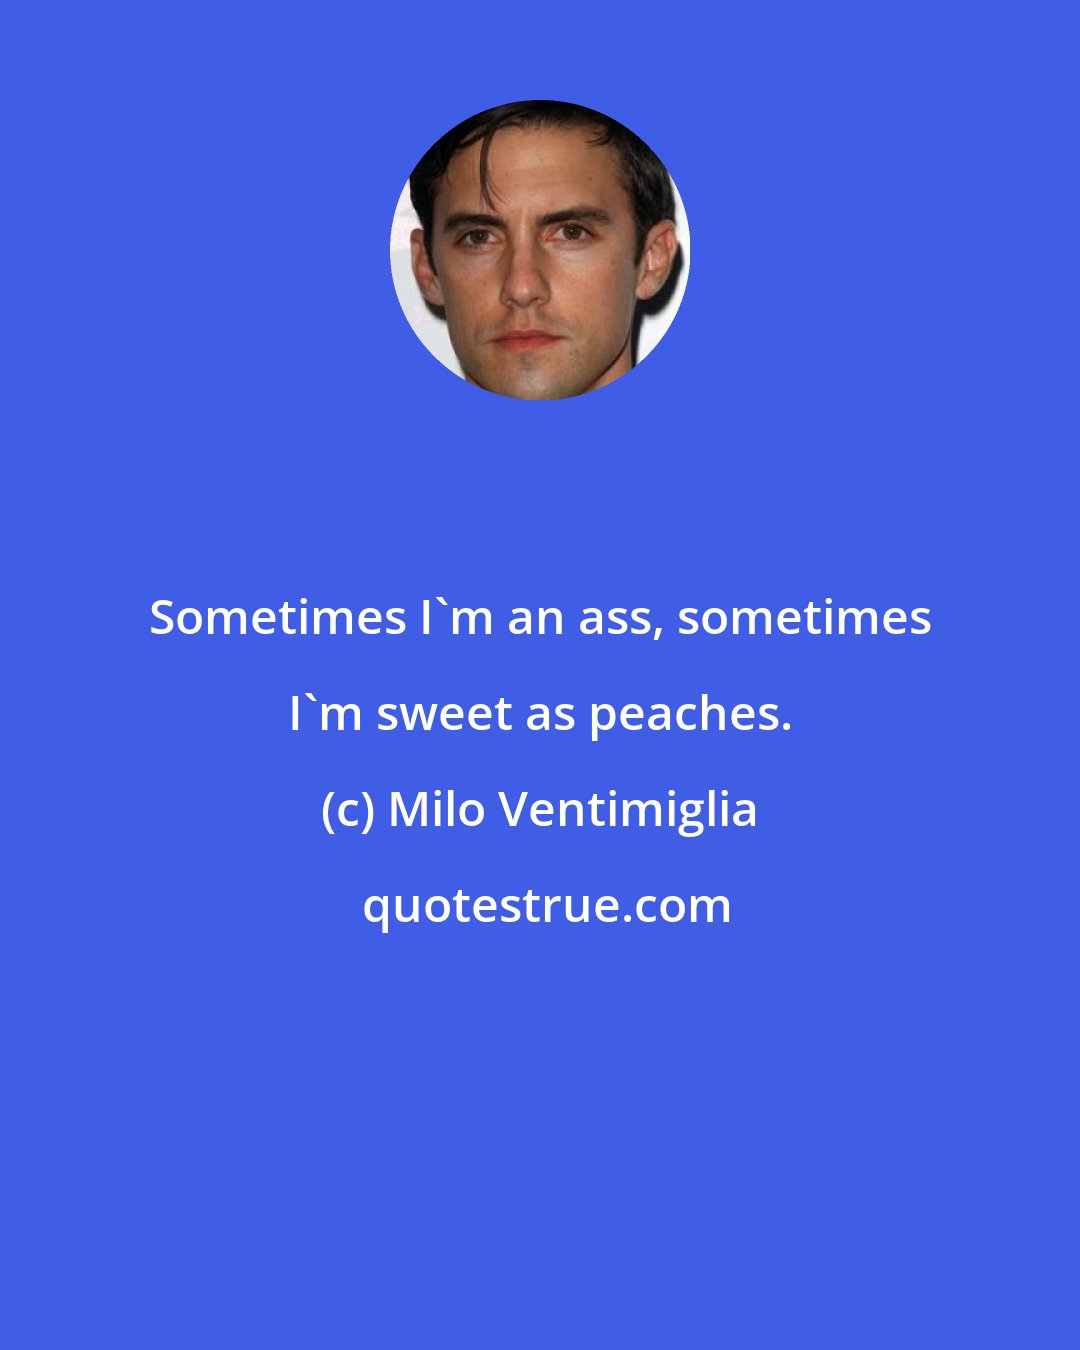 Milo Ventimiglia: Sometimes I'm an ass, sometimes I'm sweet as peaches.